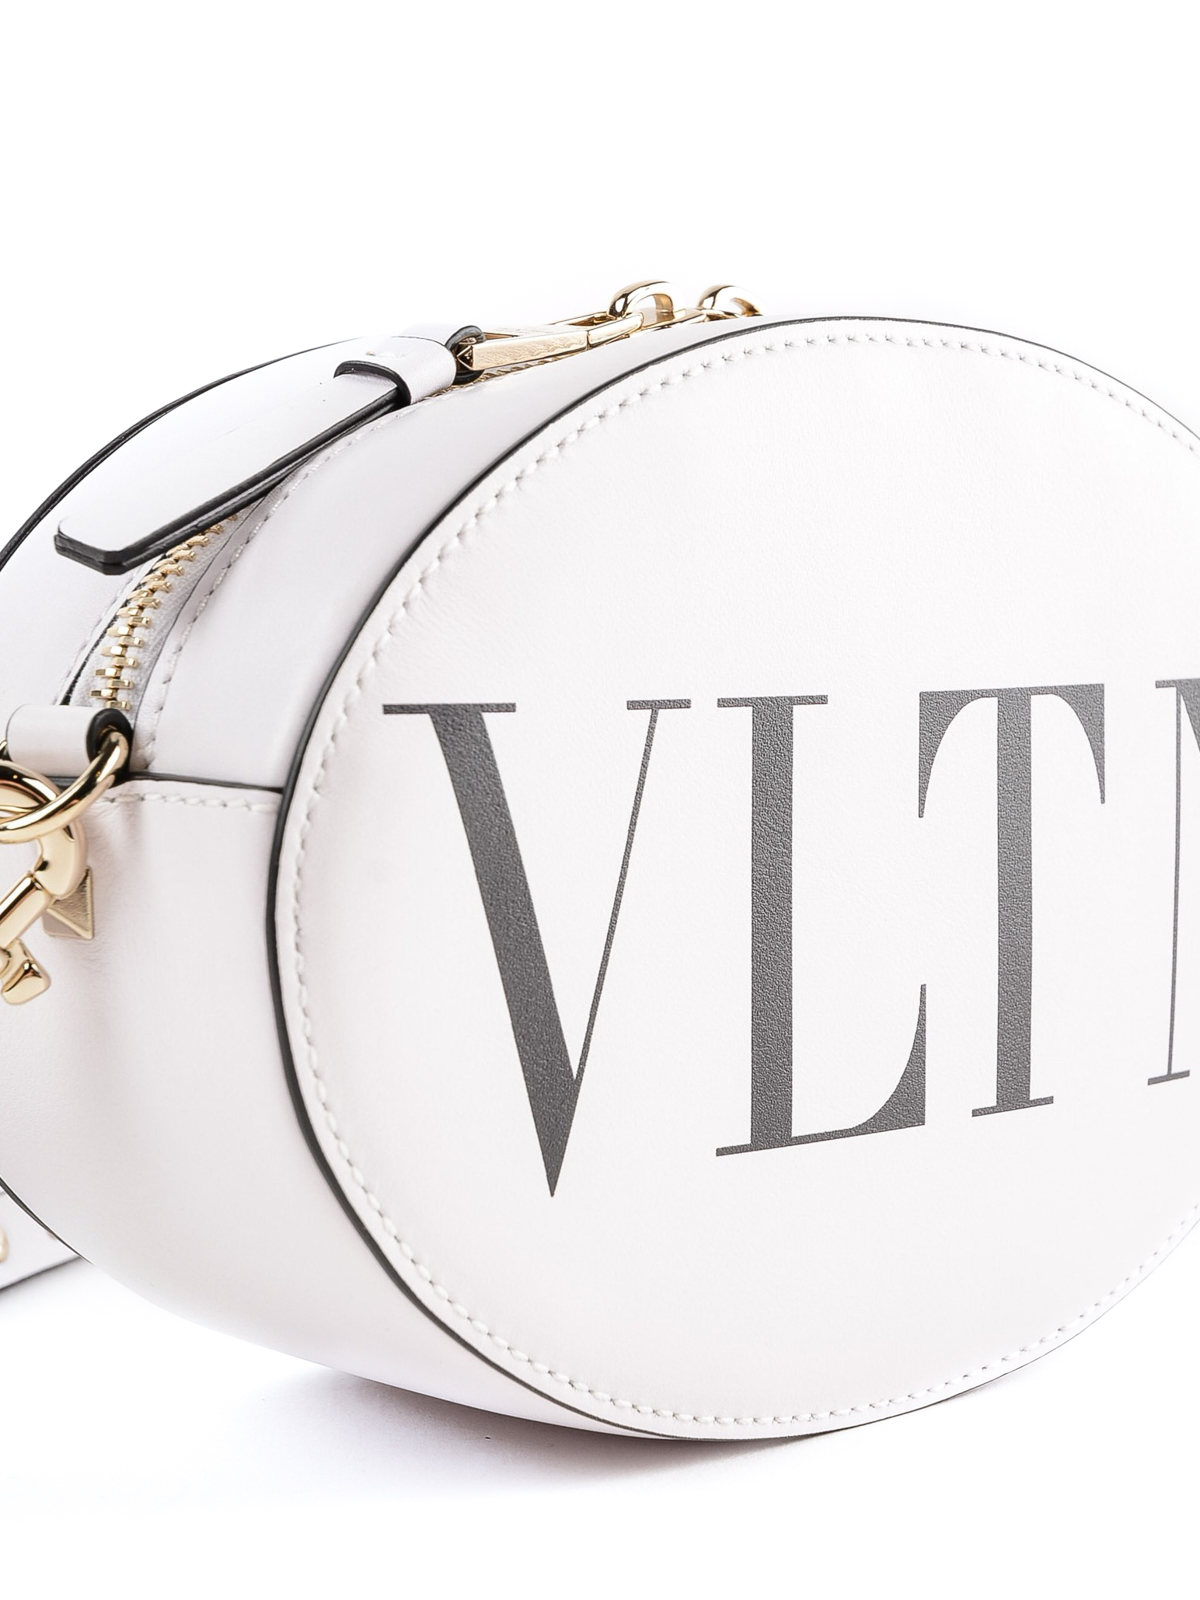 Valentino Men's VLTN Small Cross Body Bag in Nero/Bianco Valentino